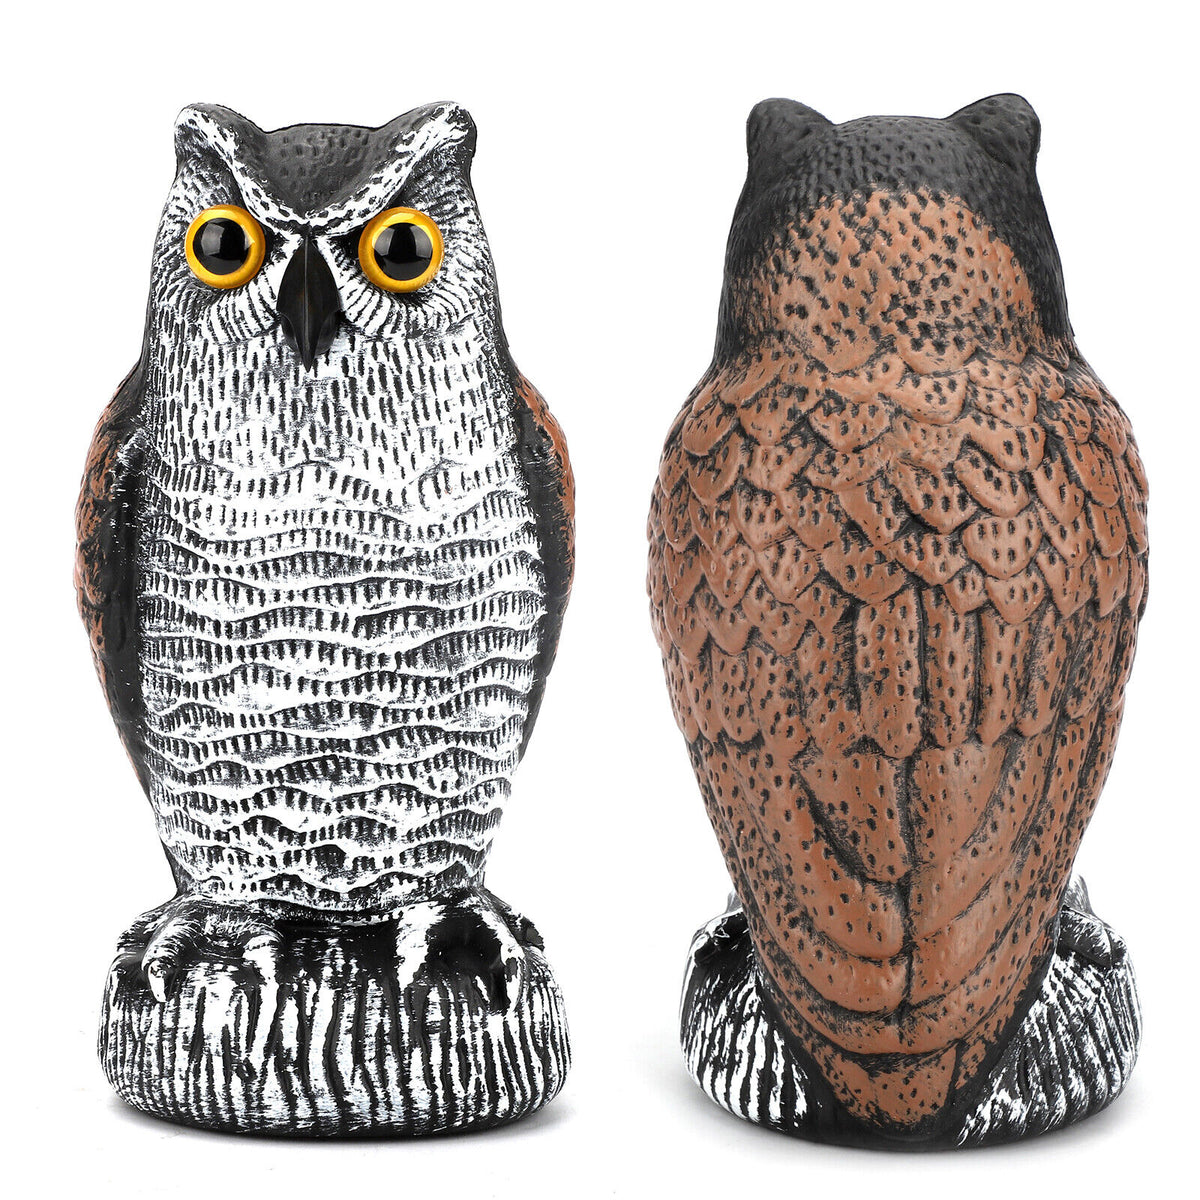 Realistic Owl Statue Garden Ornament Outdoor Decor